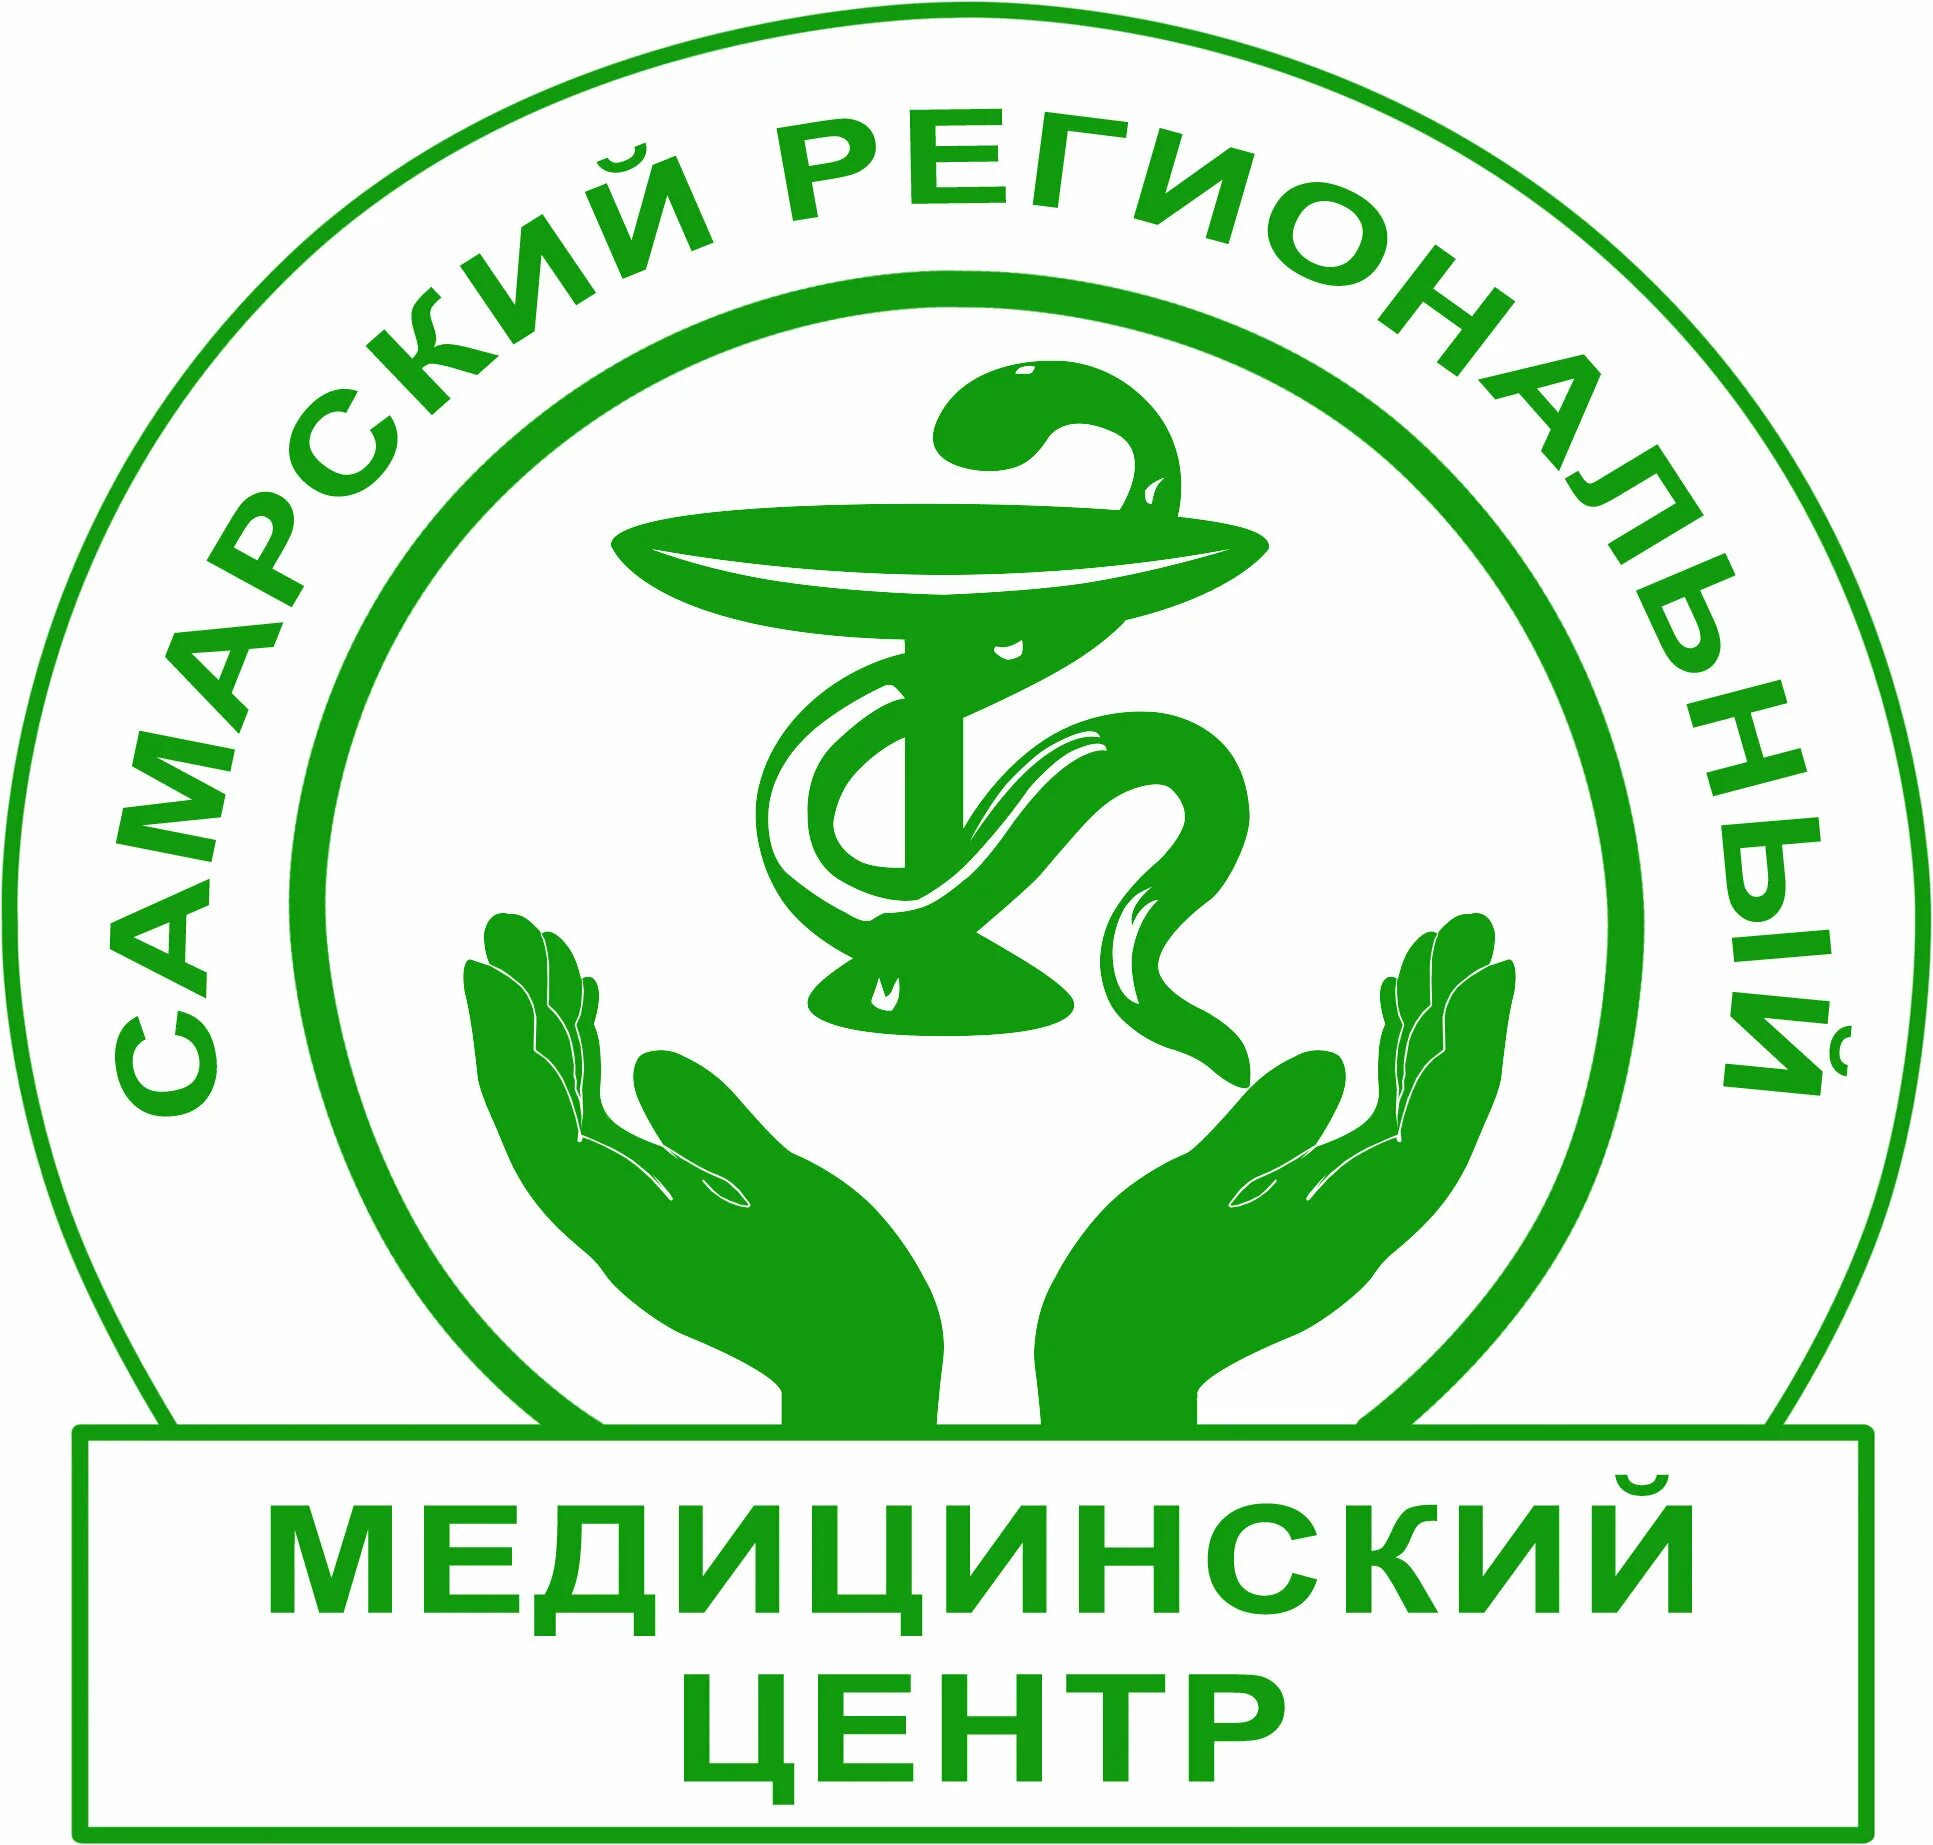 Медицинский центр Самарский. Эмблемы медицинских учреждений. Медицинский центр Самара логотип. Самарский региональный медицинский центр в Сызрани.